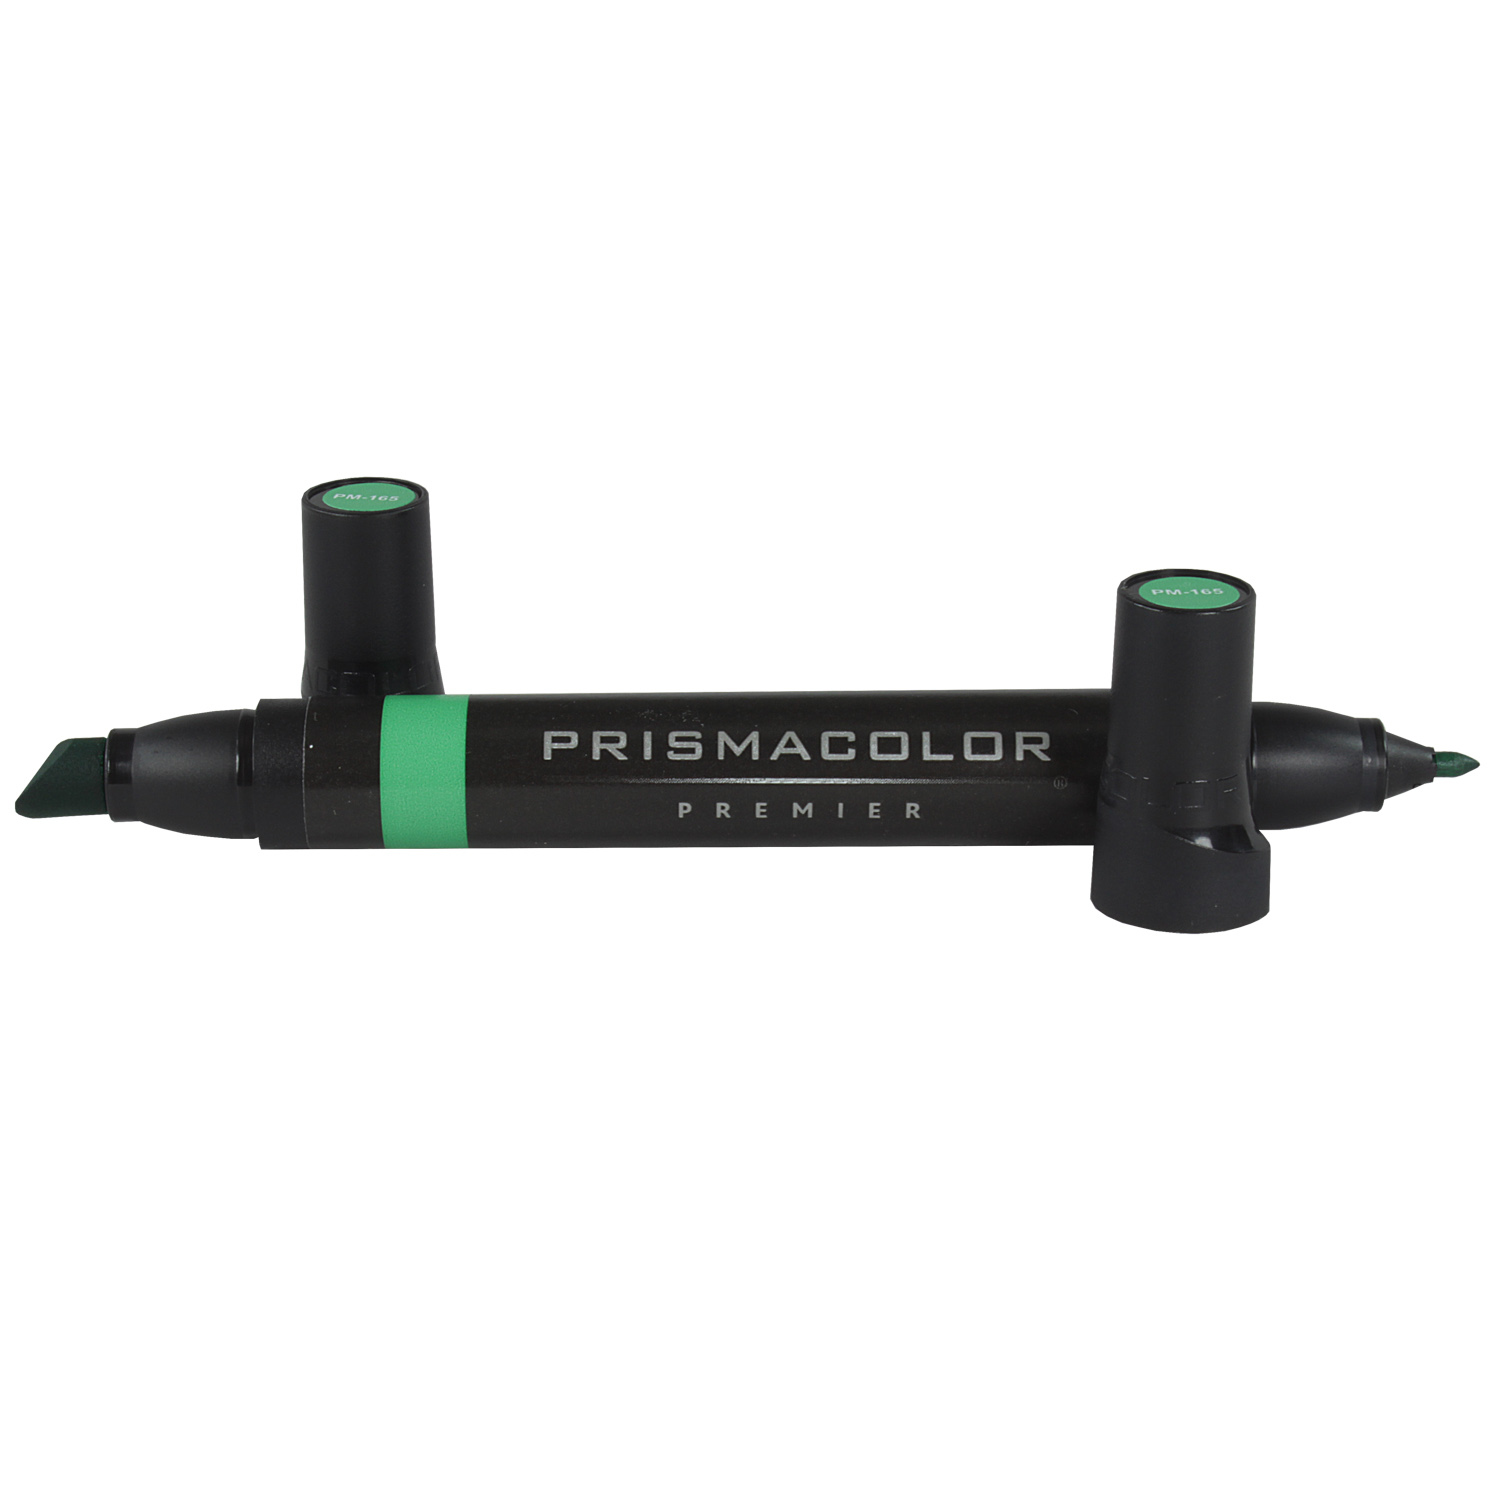 Marcadores en base alcohol Prismacolor Premier